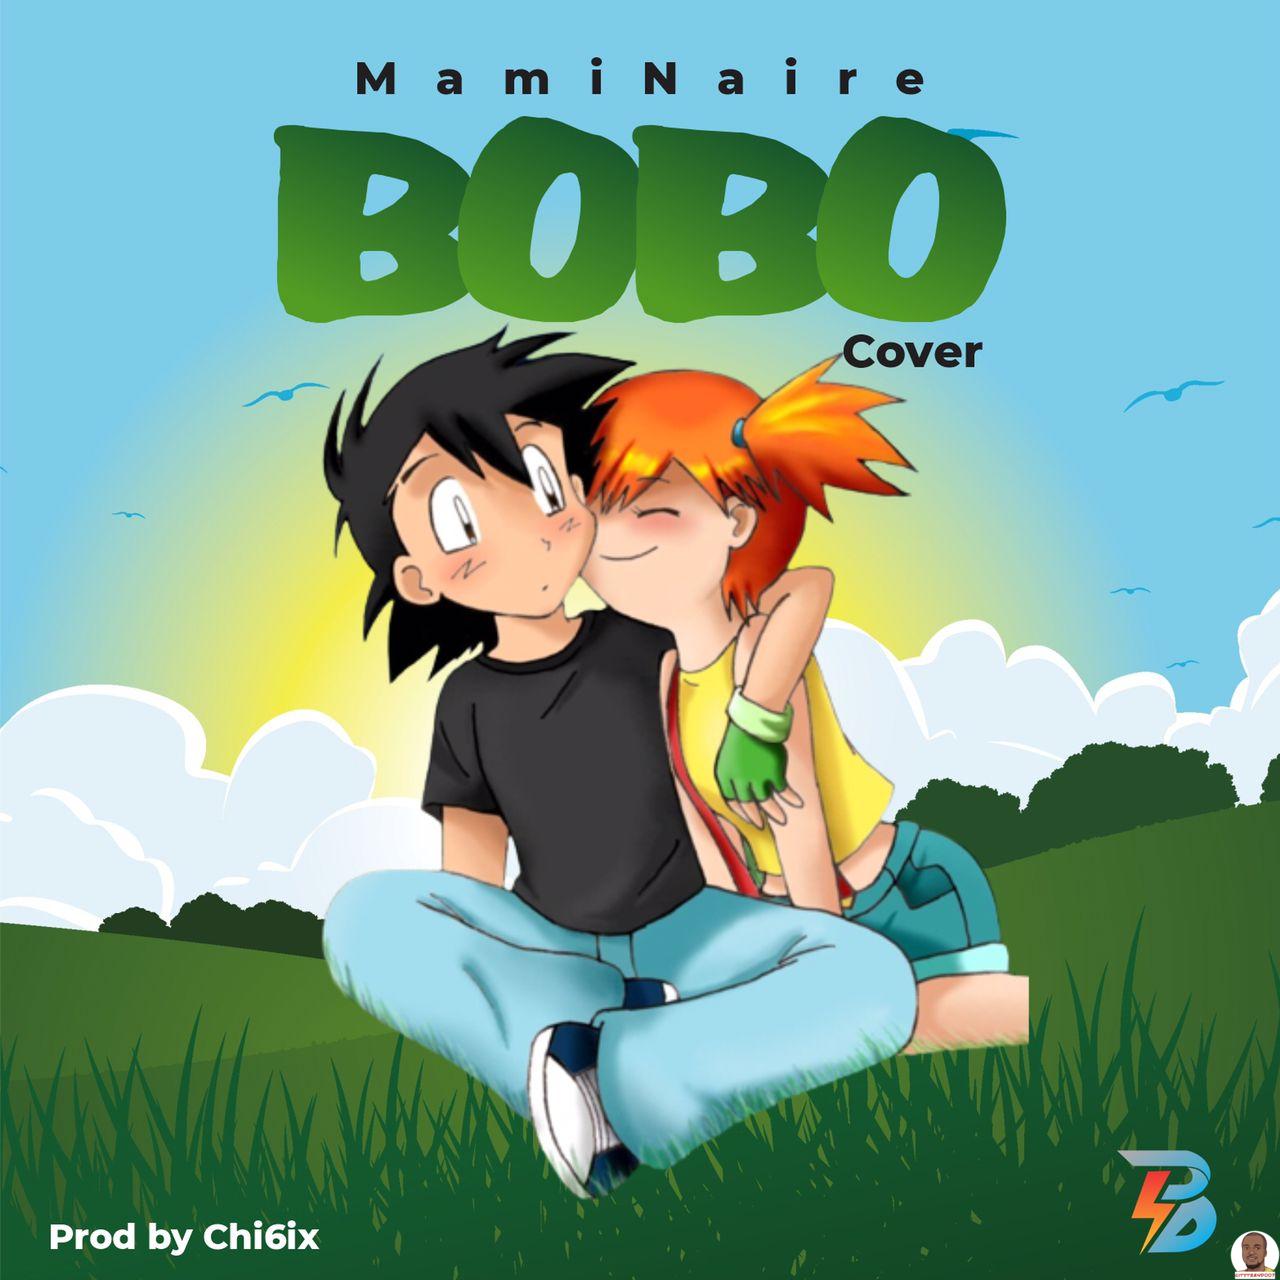 Mami Naire — Bobo Cover